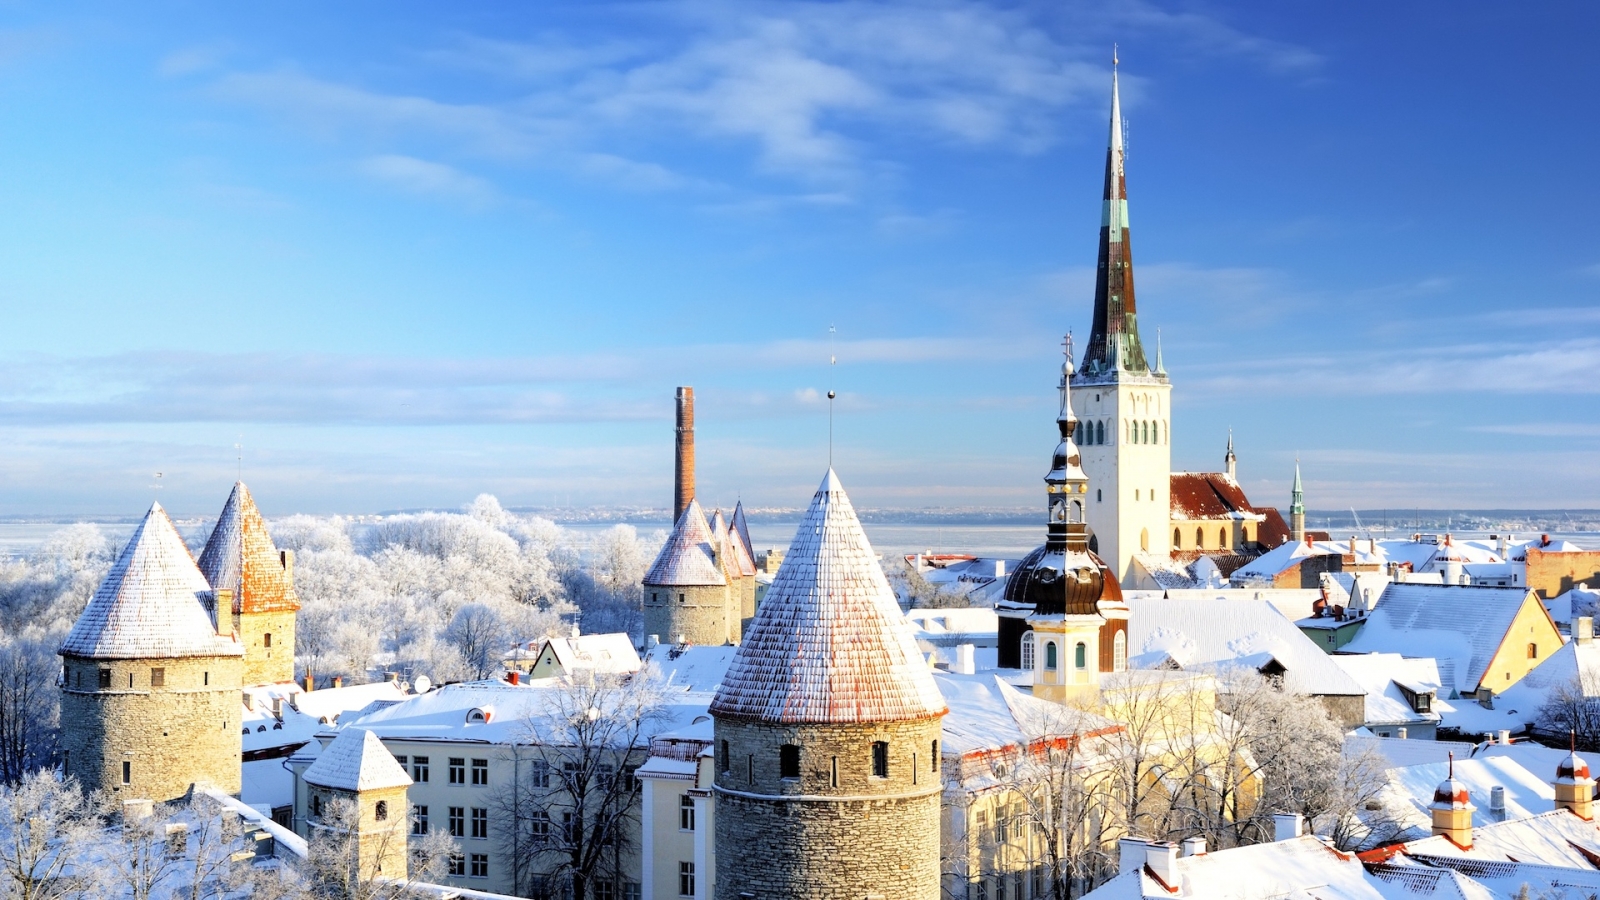 город Таллинн.  Эстония.  Снег на деревьях зимой